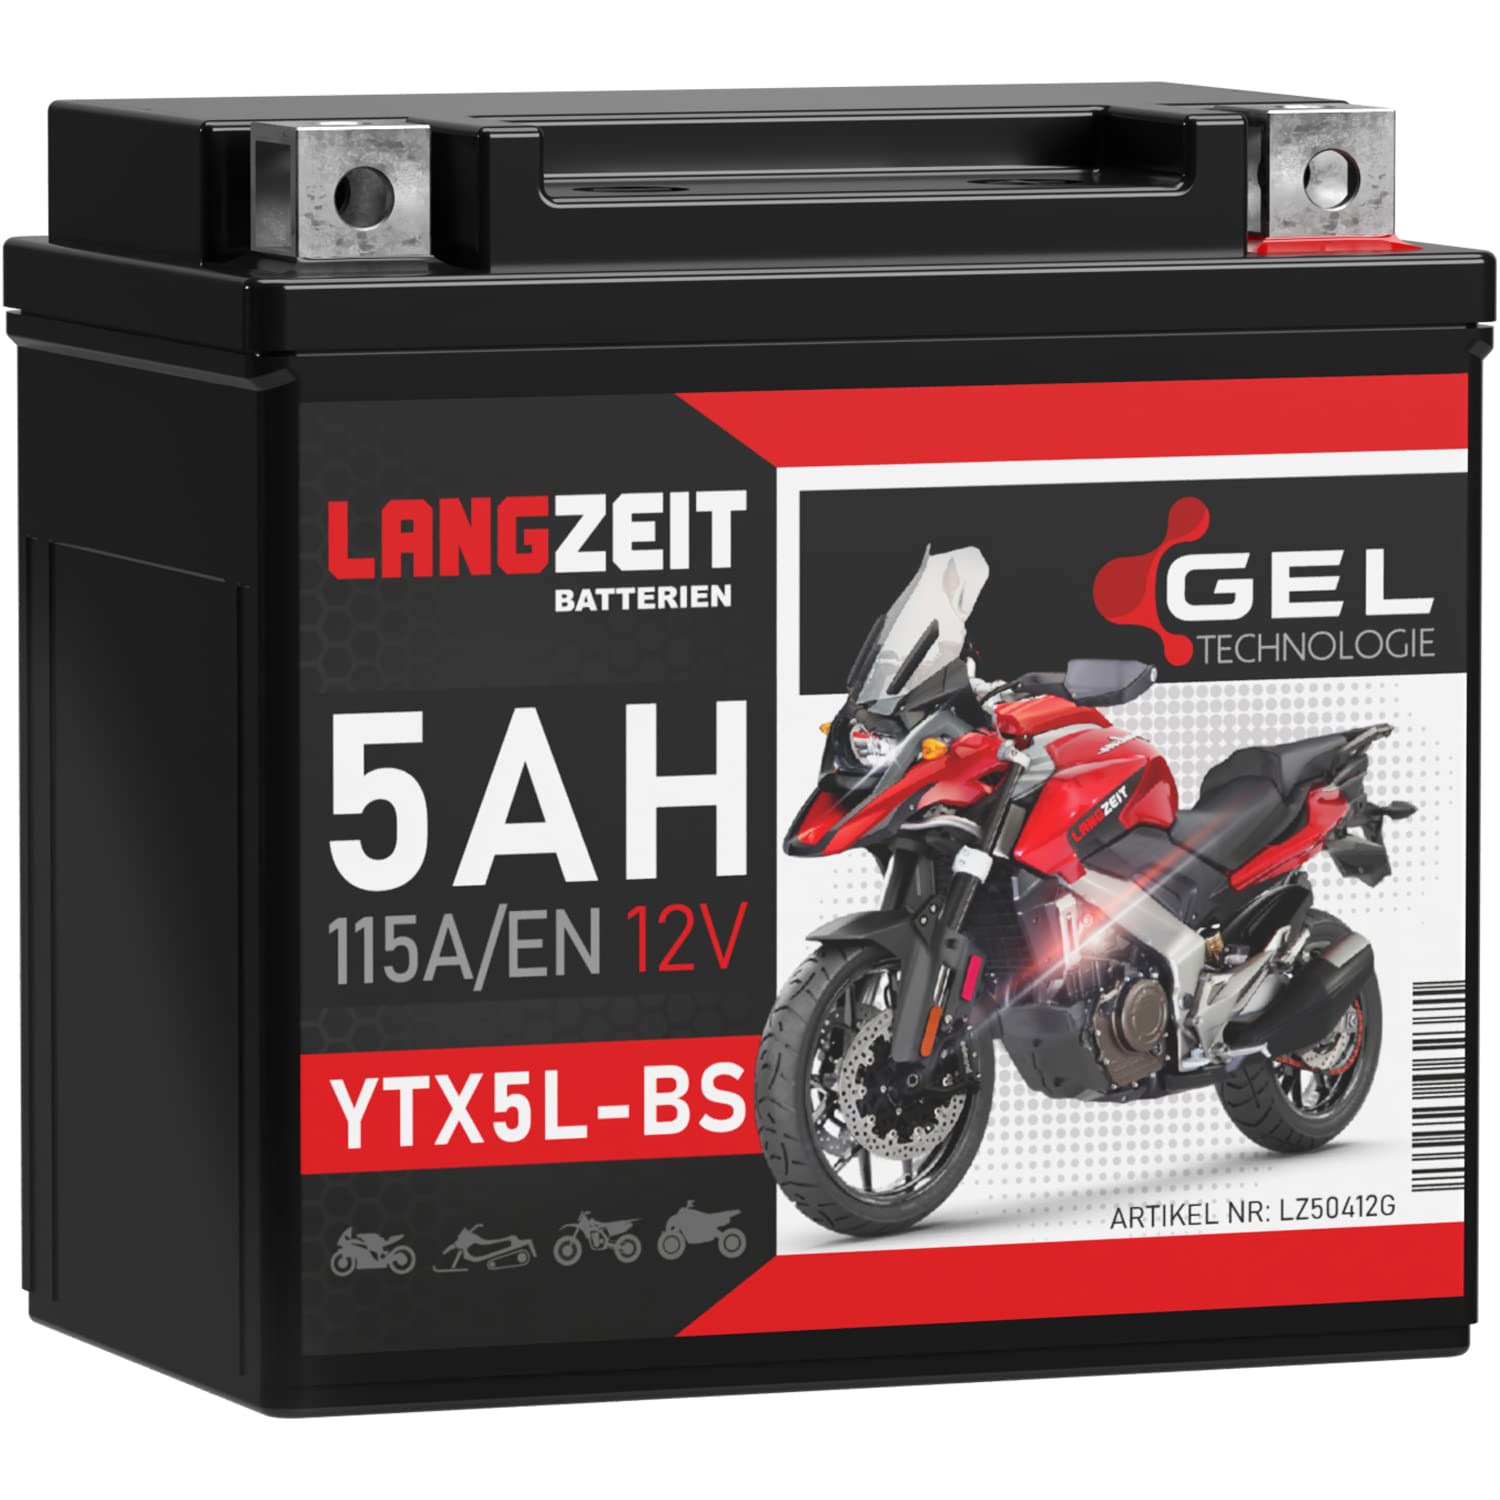 LANGZEIT YTX5L-BS GEL Roller Batterie 12V 5Ah 115A/EN GEL Batterie 12V Motorradbatterie doppelte Lebensdauer entspricht YTX5L-4 50412 CTX4L-4 YT5L-BS ersetzt 4Ah vorgeladen auslaufsicher wartungsfrei von LANGZEIT Batterien